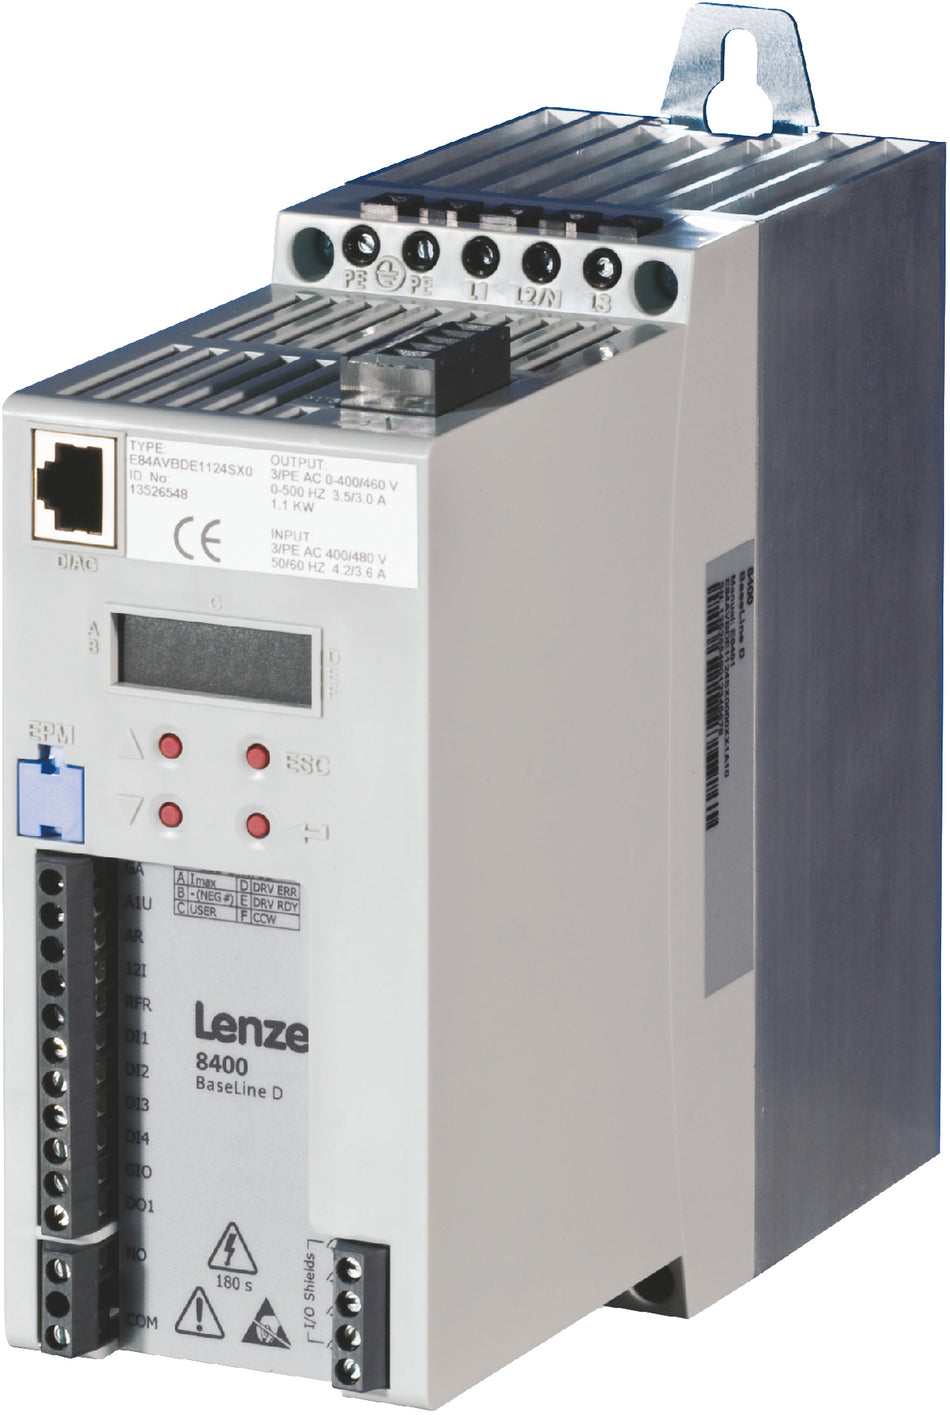 Lenze Inverter Drives 8400 BaseLine -  E84AVBDE1124SX2XX3A34 1.1 kW